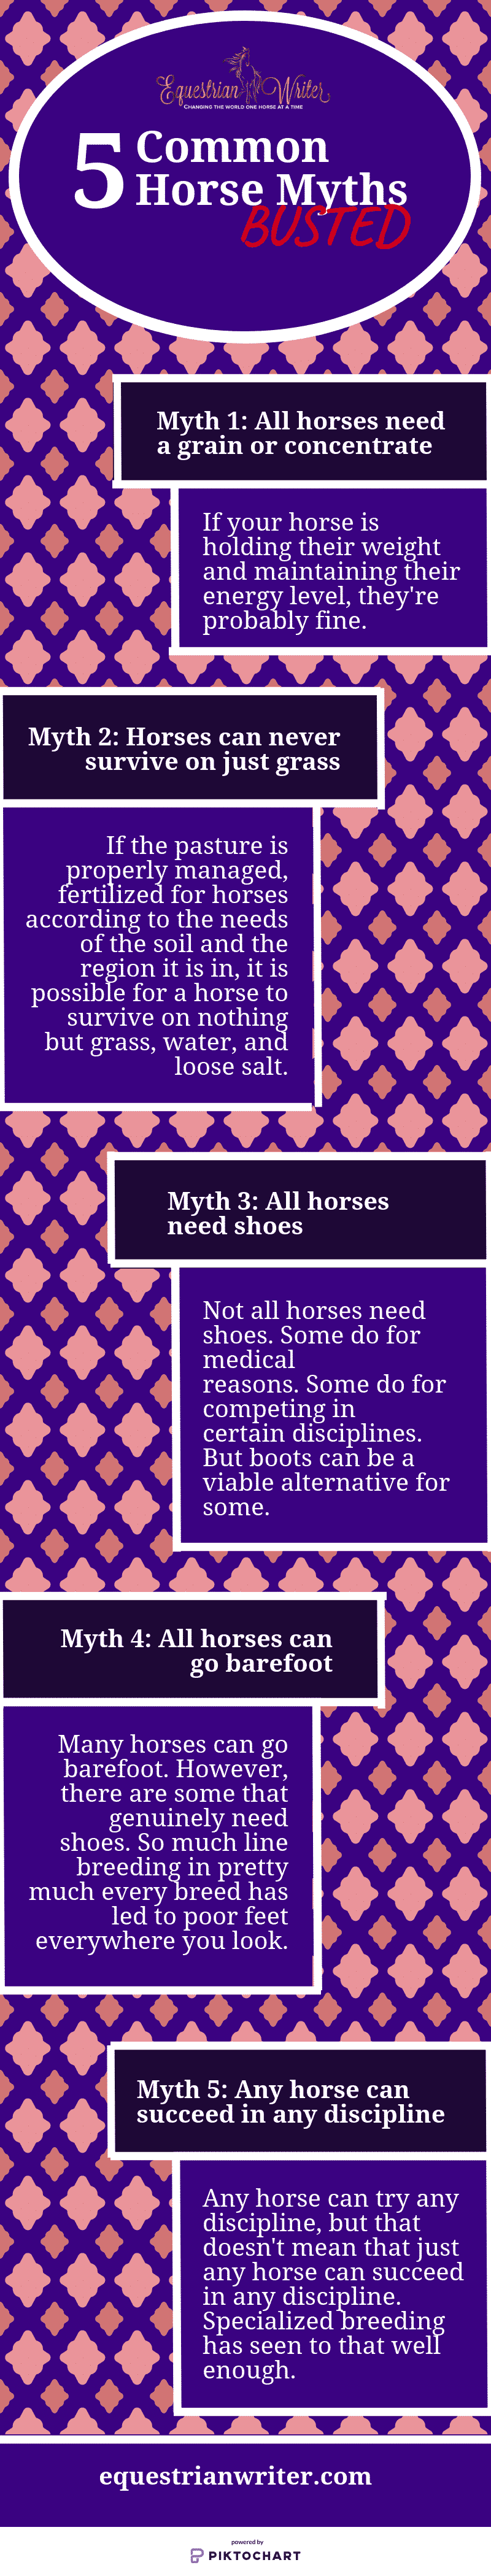 5 horse myths pinterest infographic